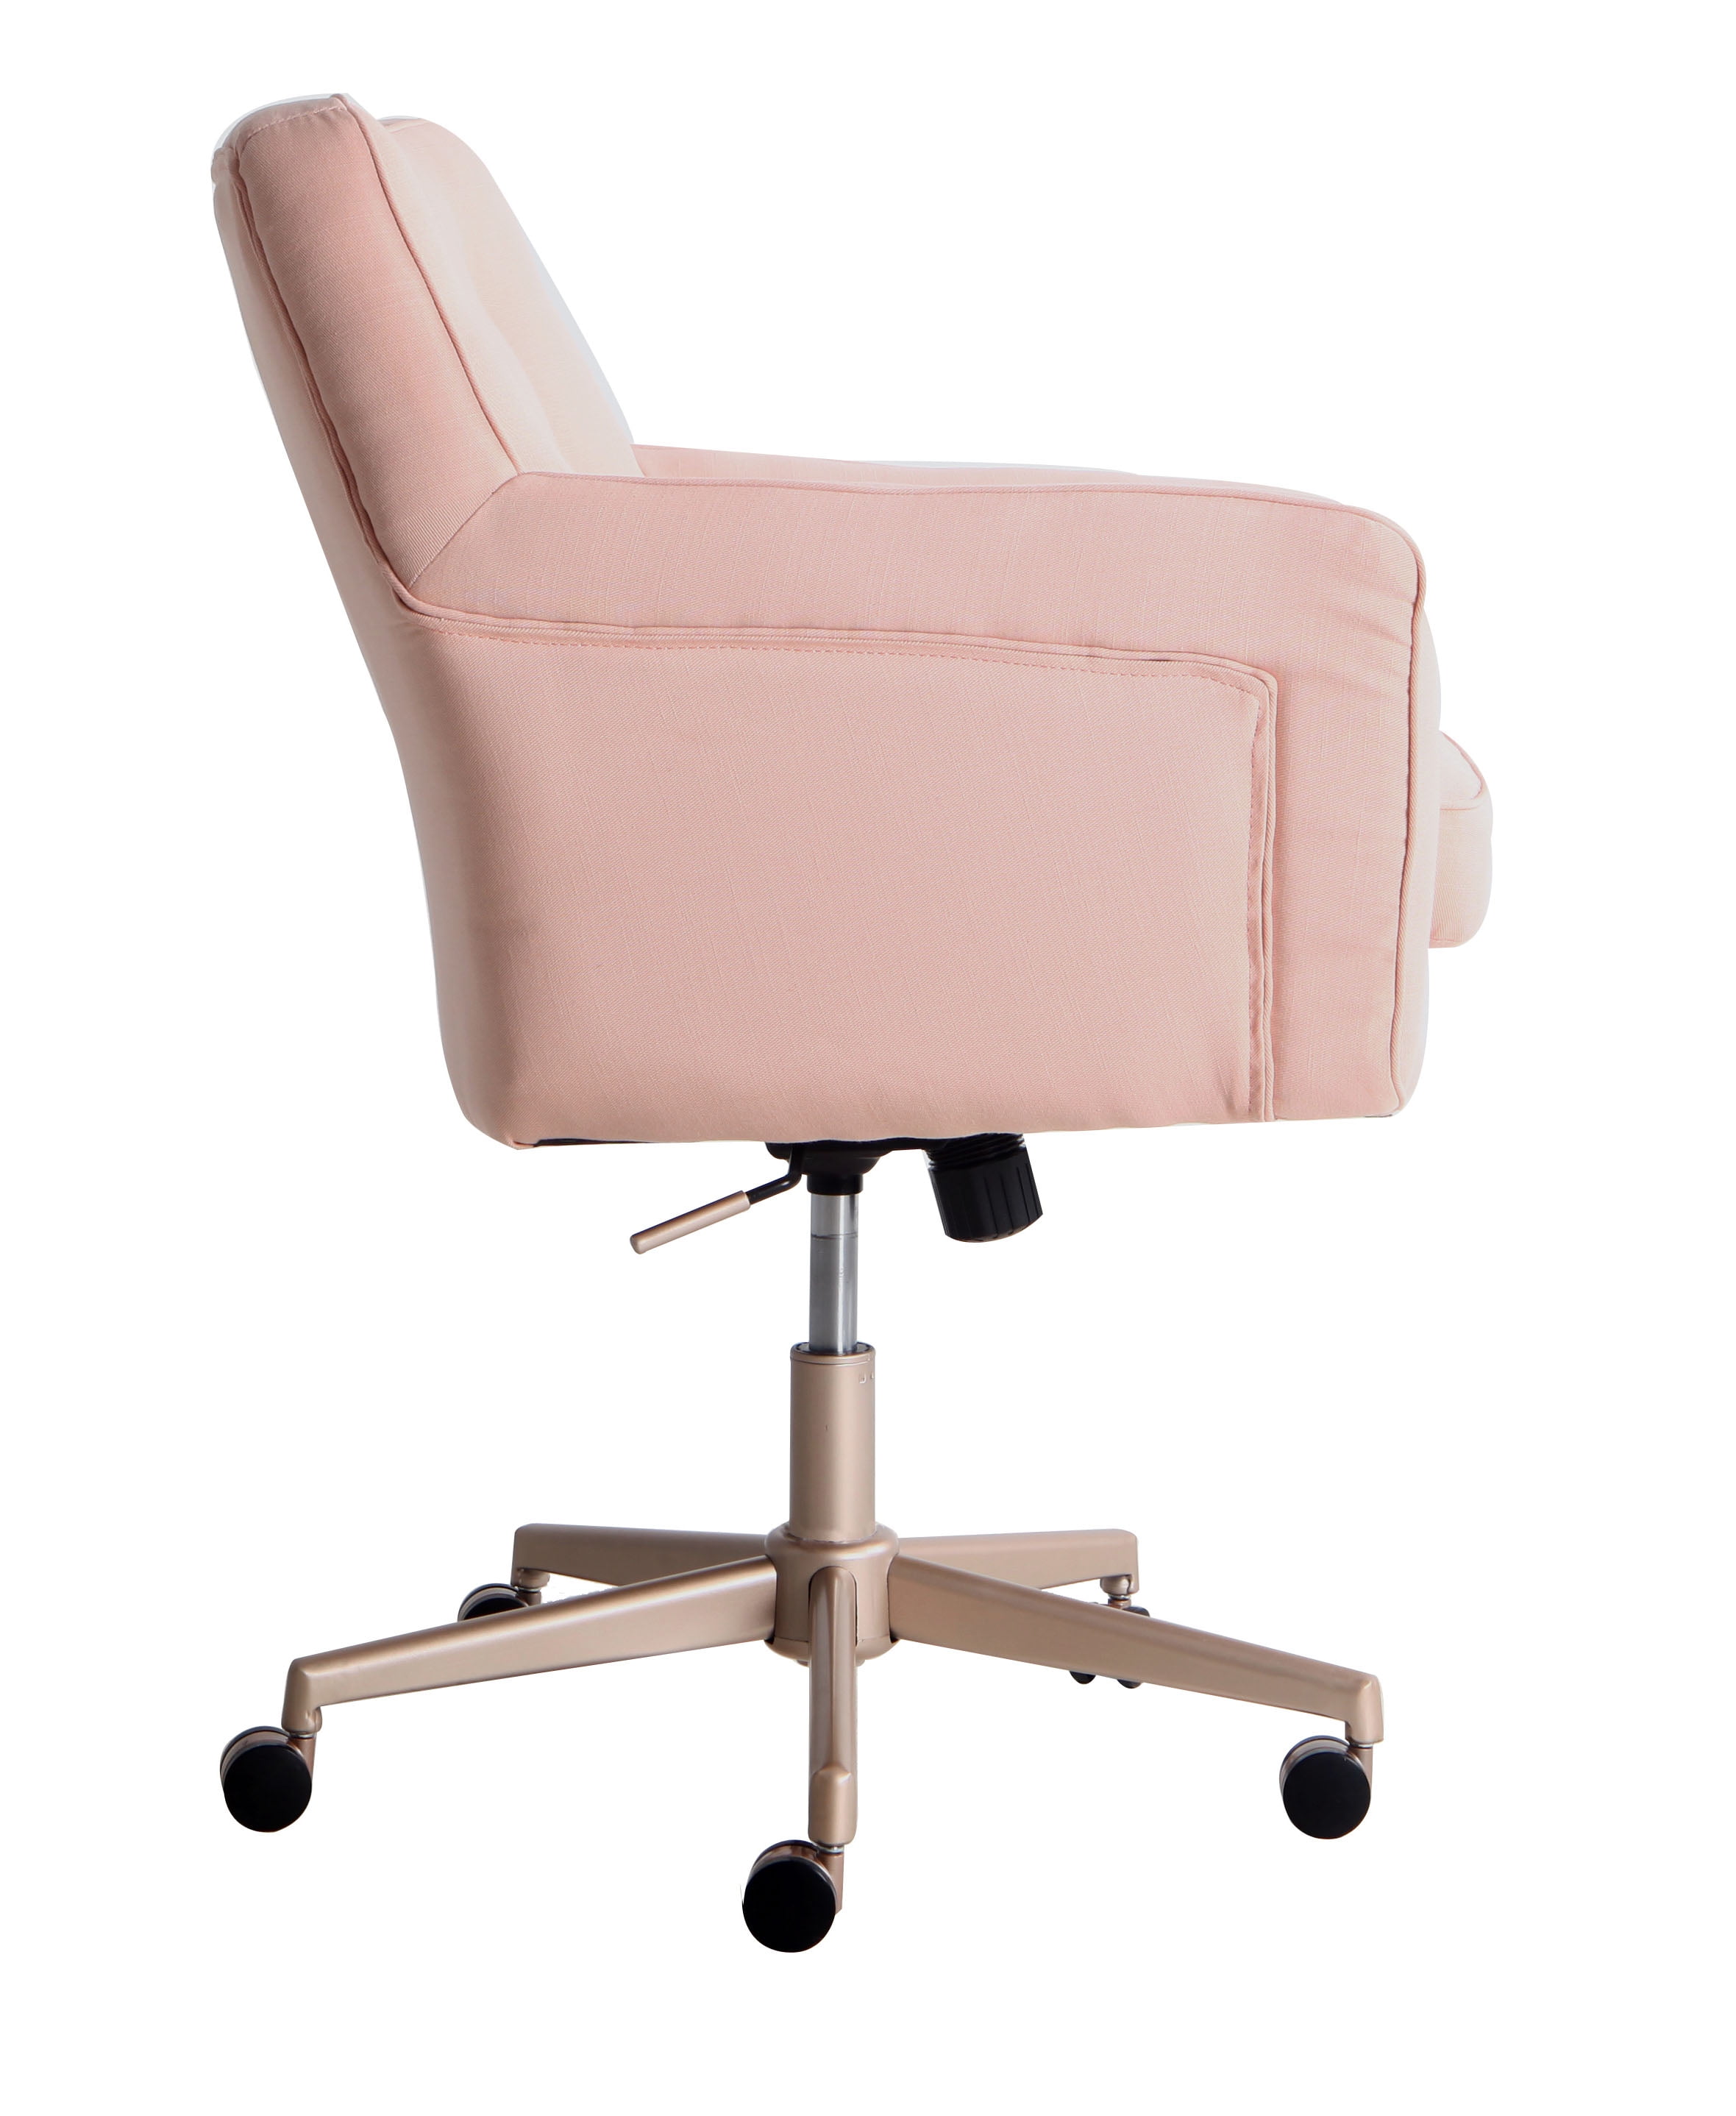 Serta Style Ashland Home Office Chair, Blush Pink Twill Fabric 